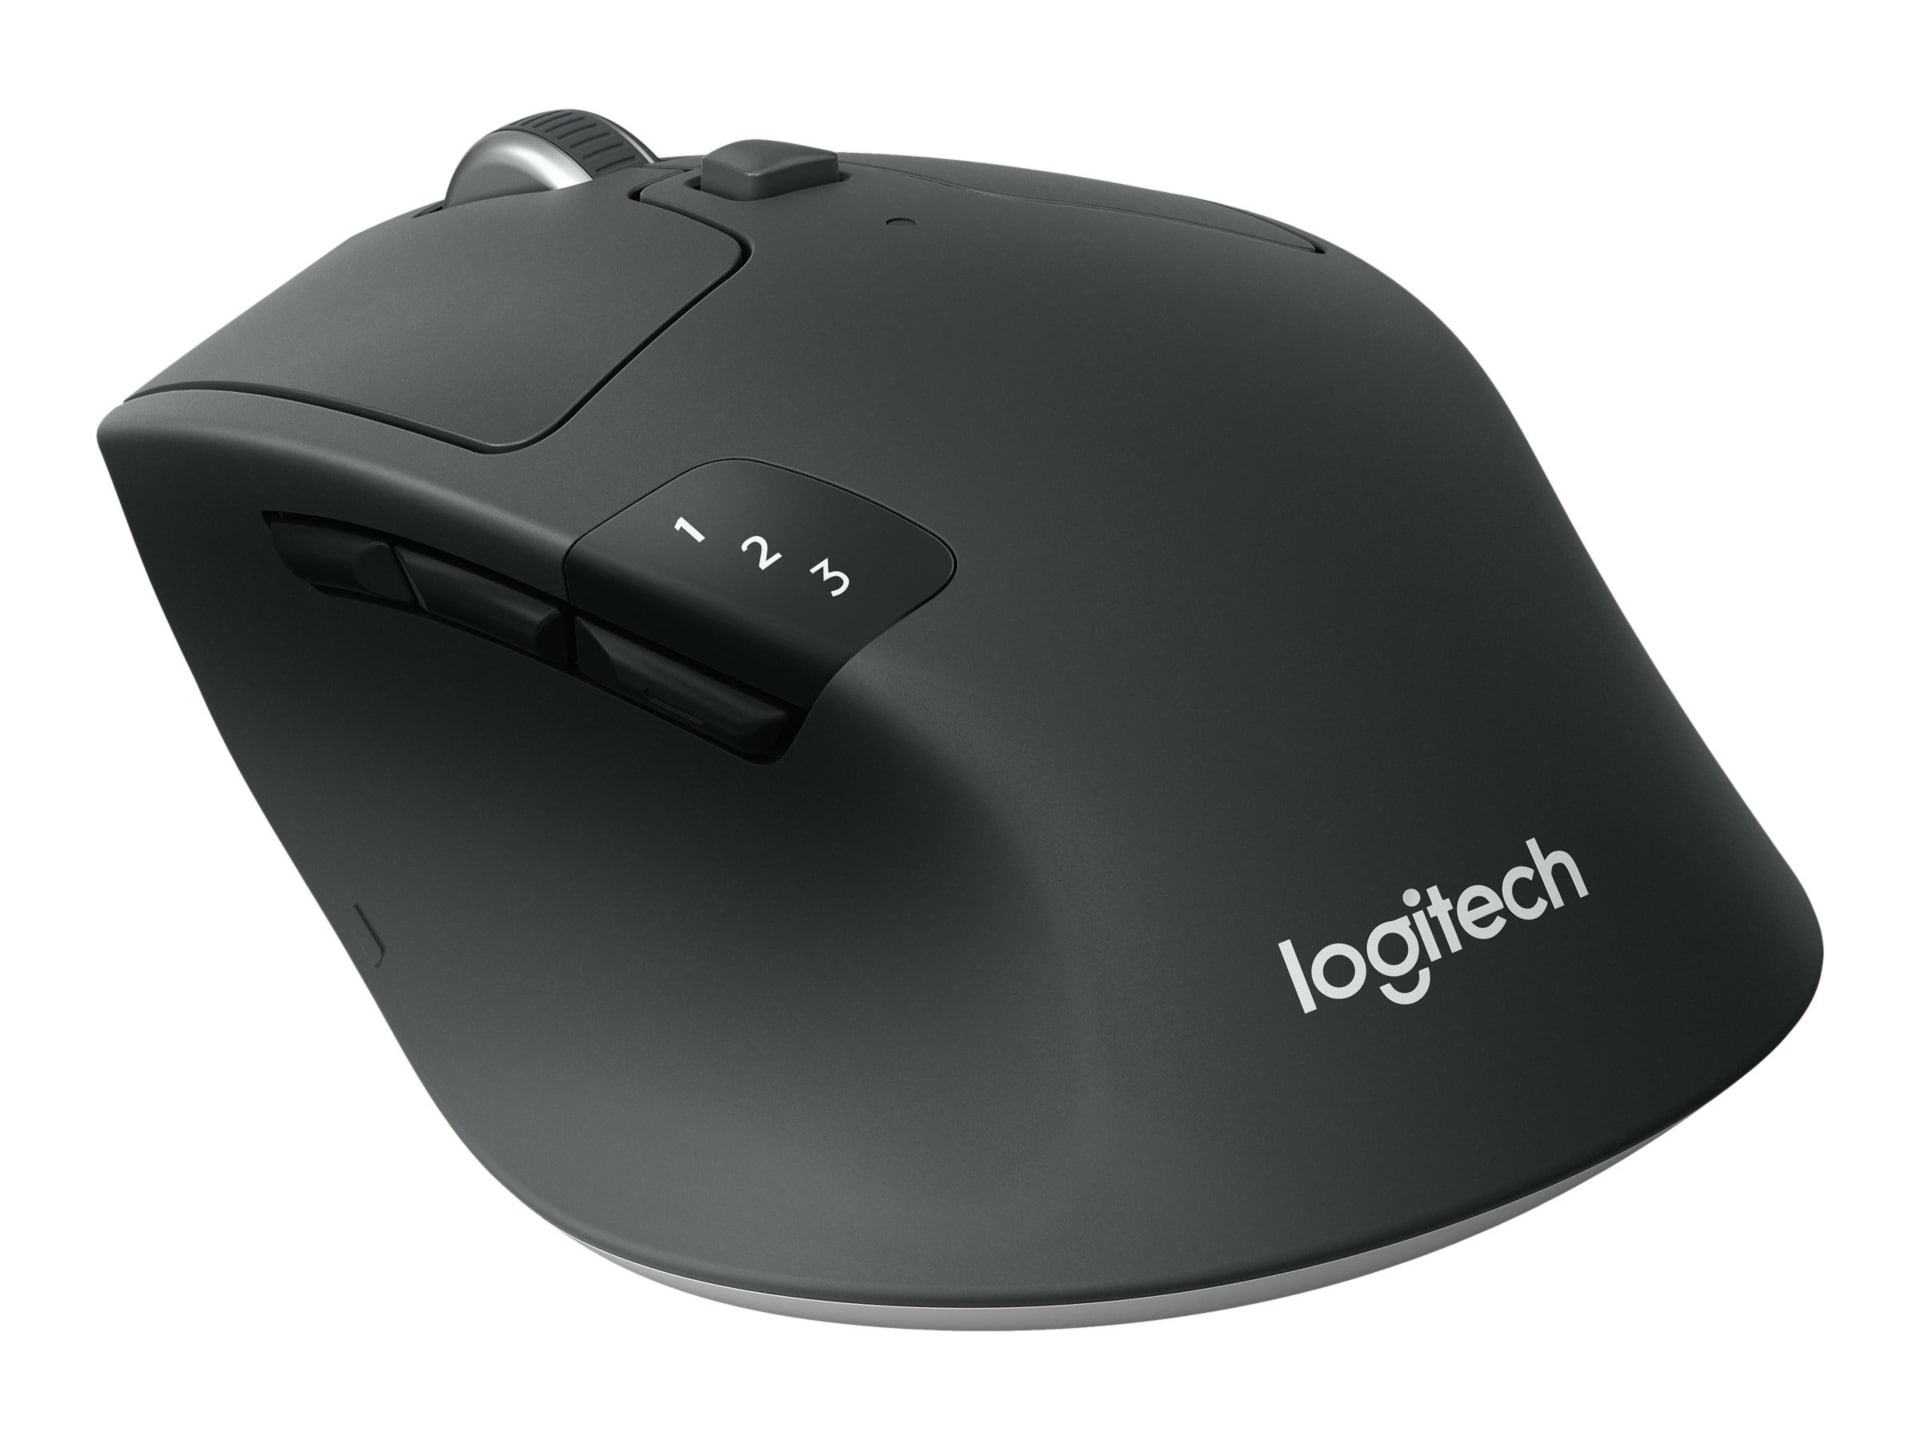 Logitech M720 Triathlon Wireless Optical Mouse Black 910-004790